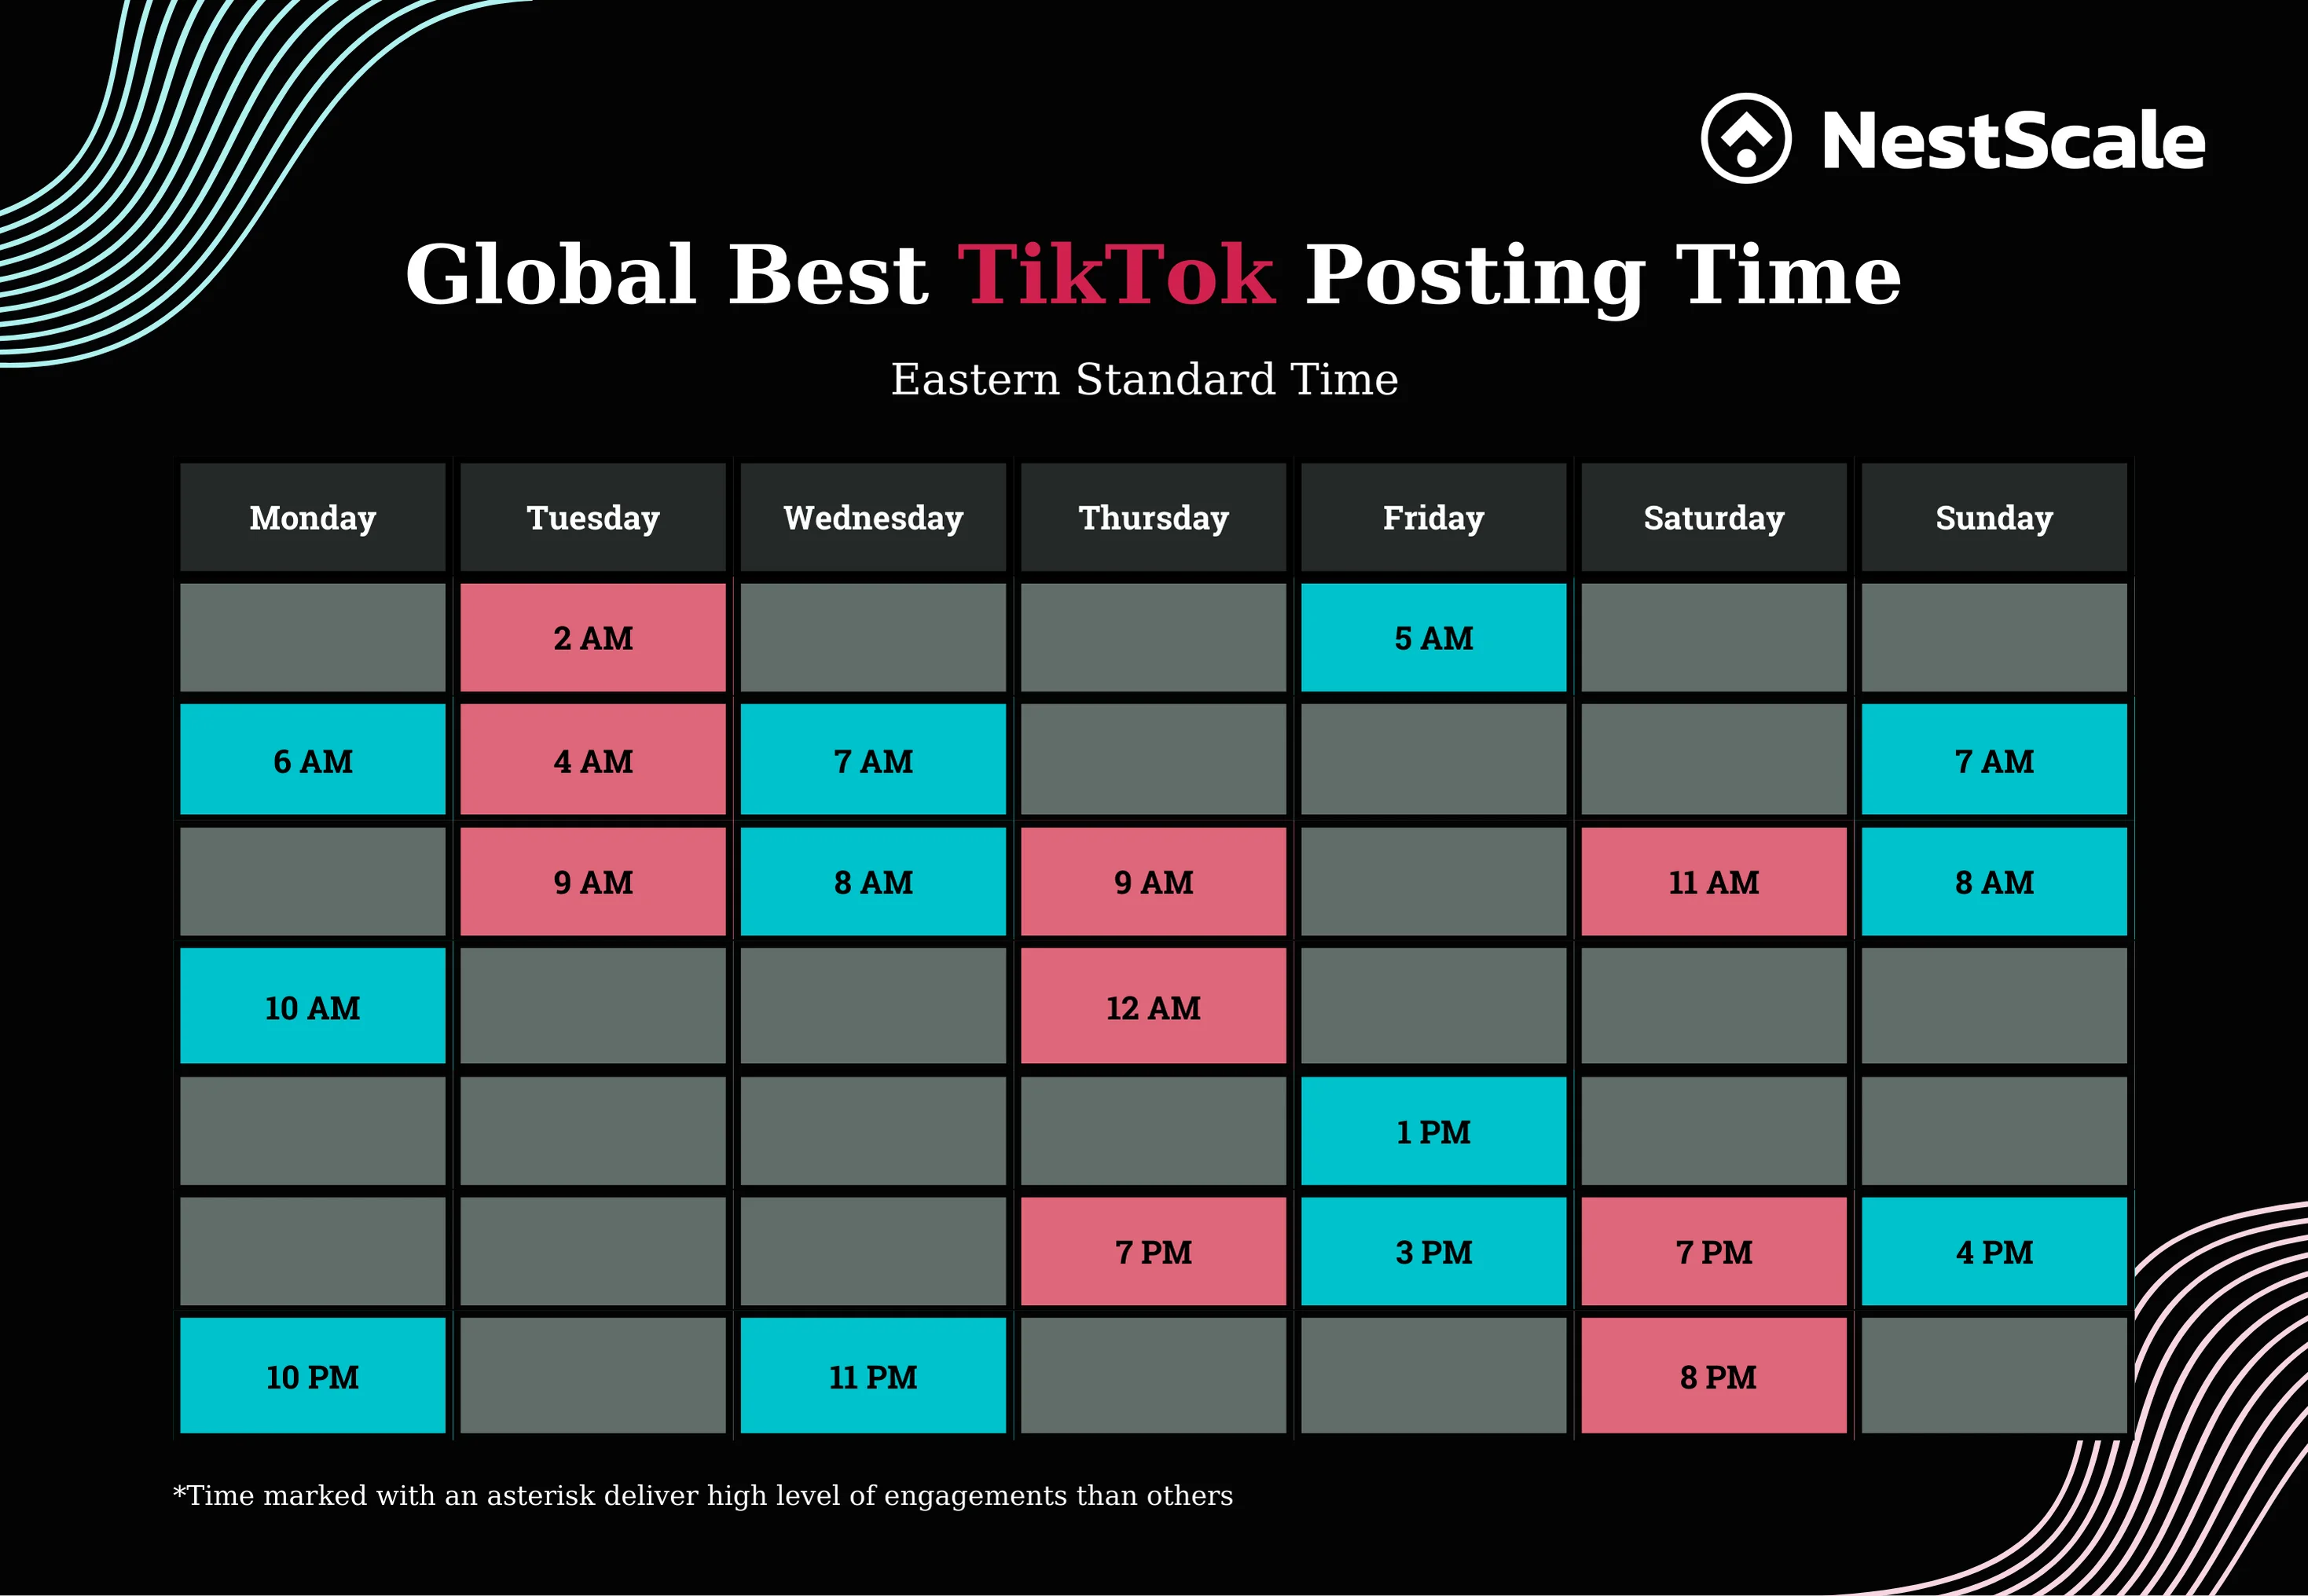 Timeframe for posting TikTok trends